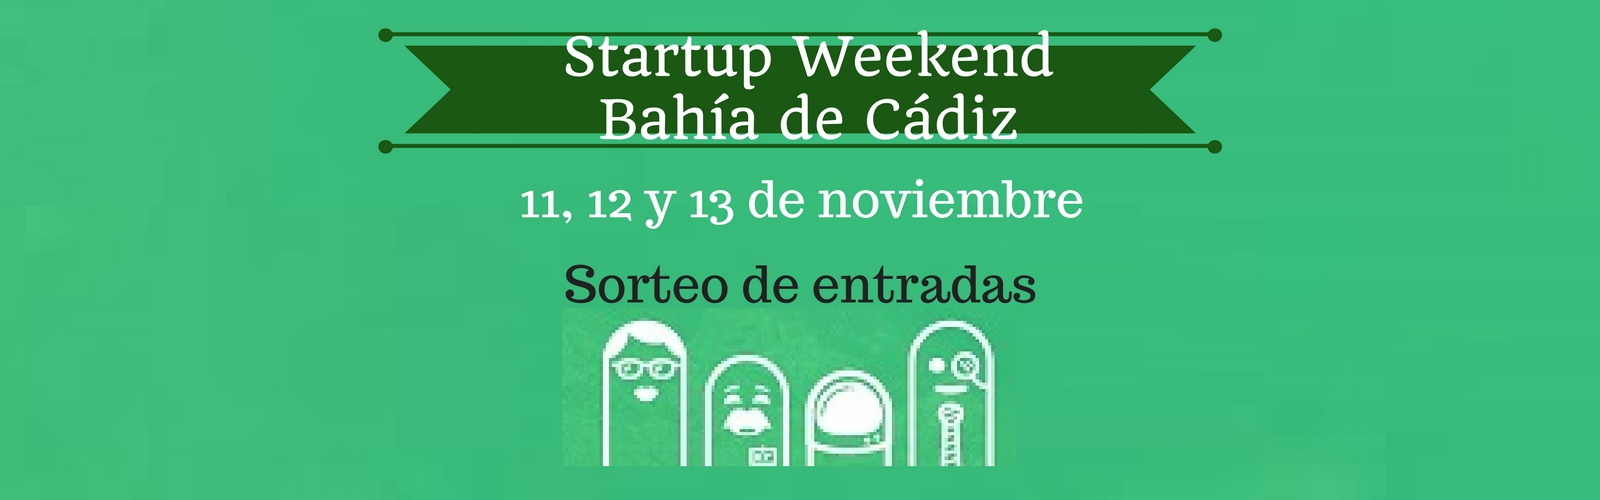 Sorteo Startup weekend Bahía de Cádiz